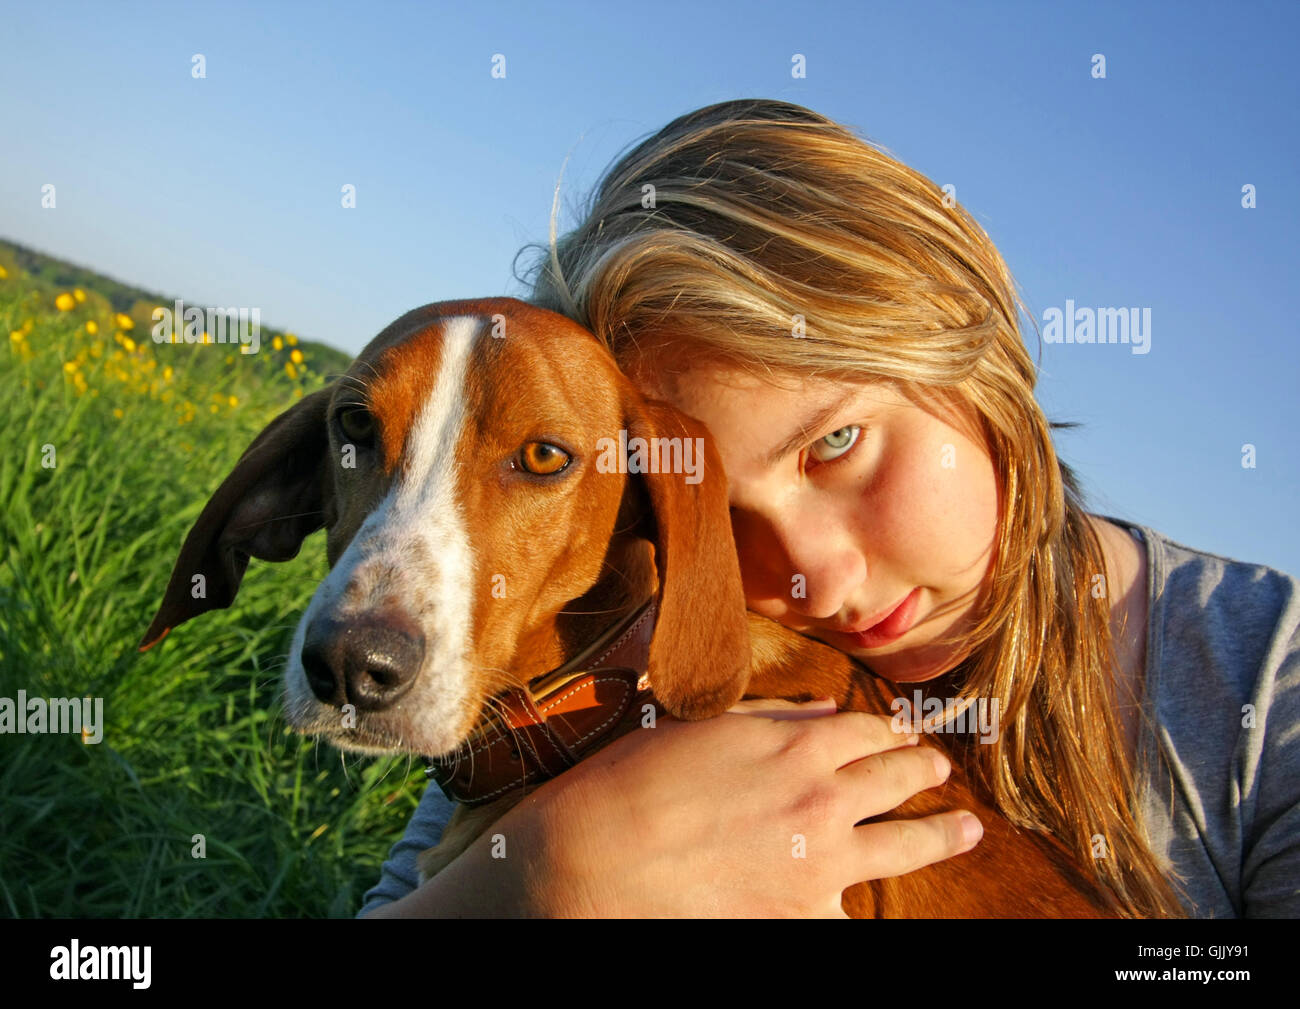 dog embrace meadow Stock Photo